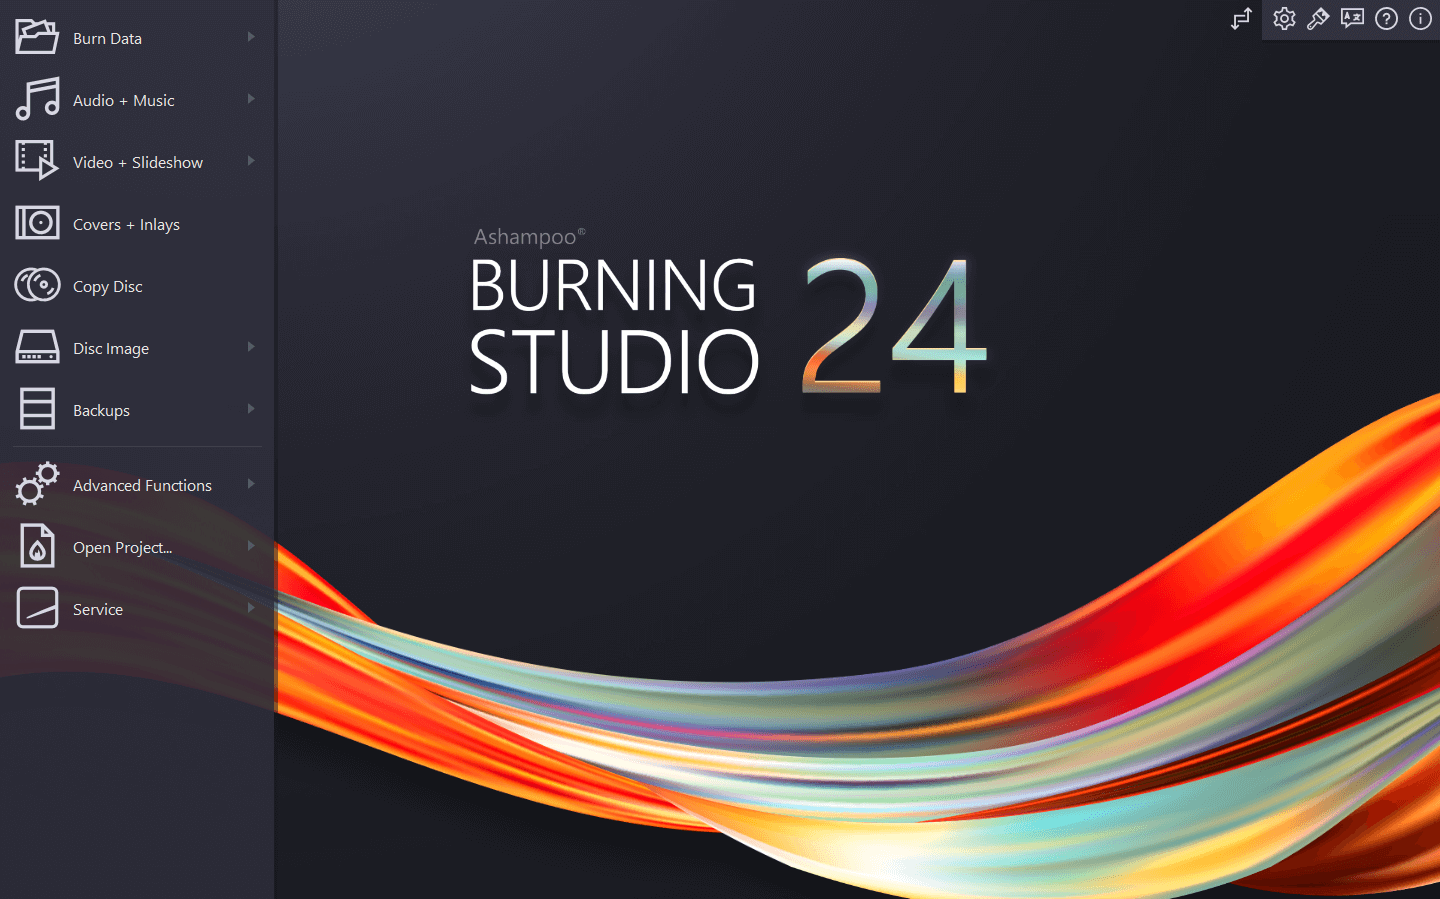 Ashampoo® Burning Studio 24 - Screenshots